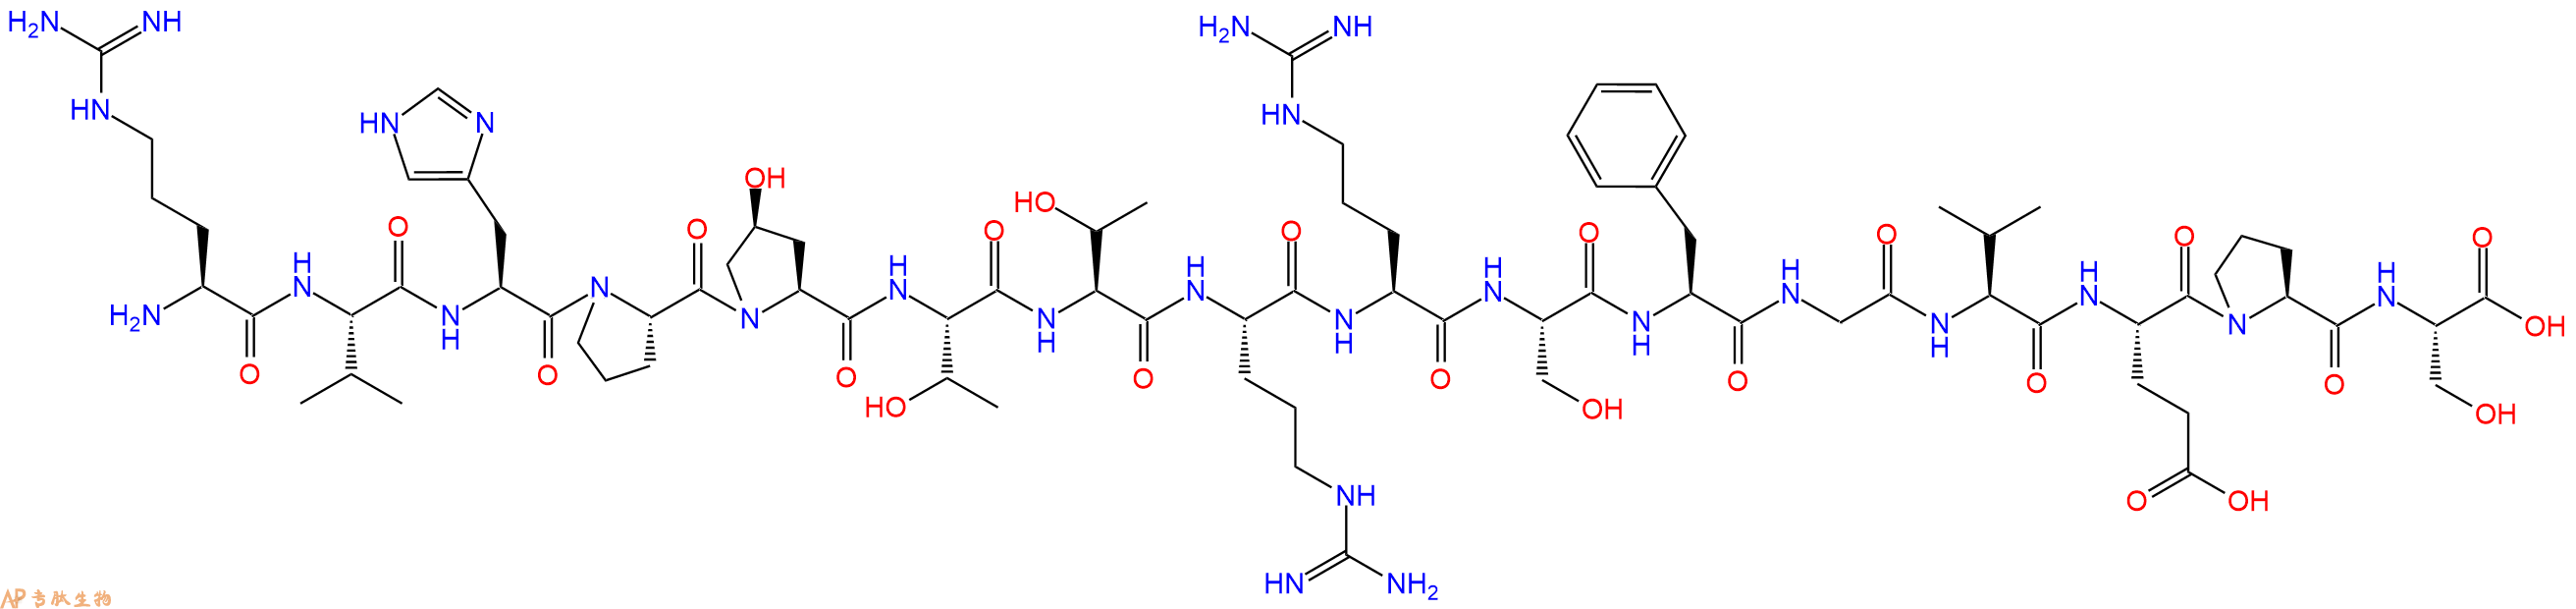 专肽生物产品H2N-Arg-Val-His-Pro-Hyp-Thr-Thr-Arg-Arg-Ser-Phe-Gl